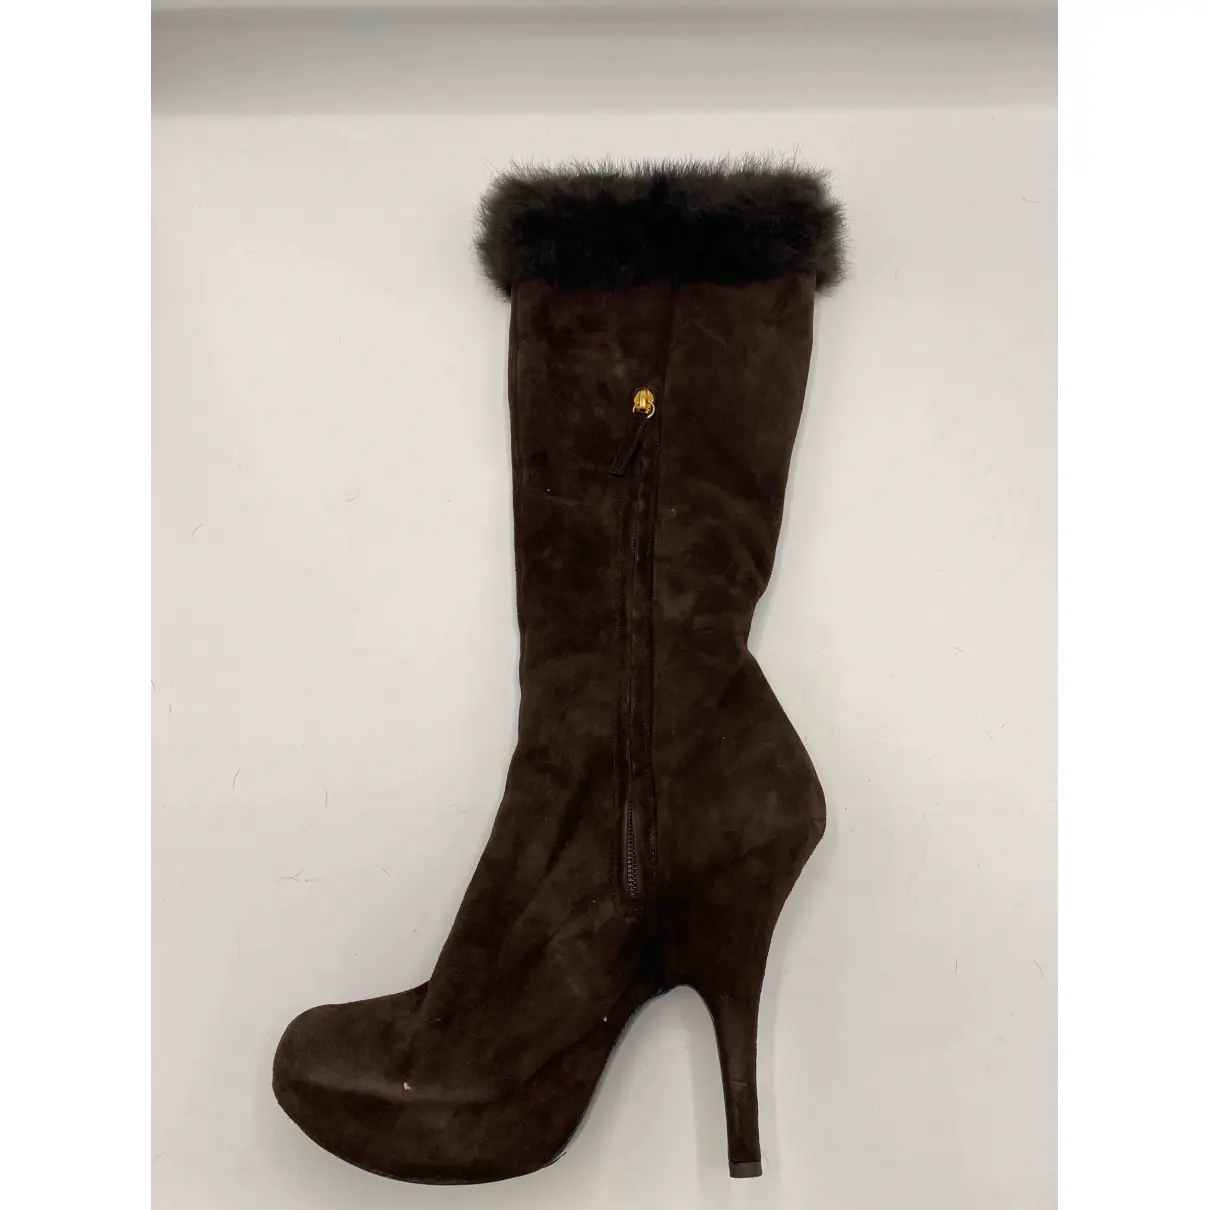 Buy Giuseppe Zanotti Snow boots online